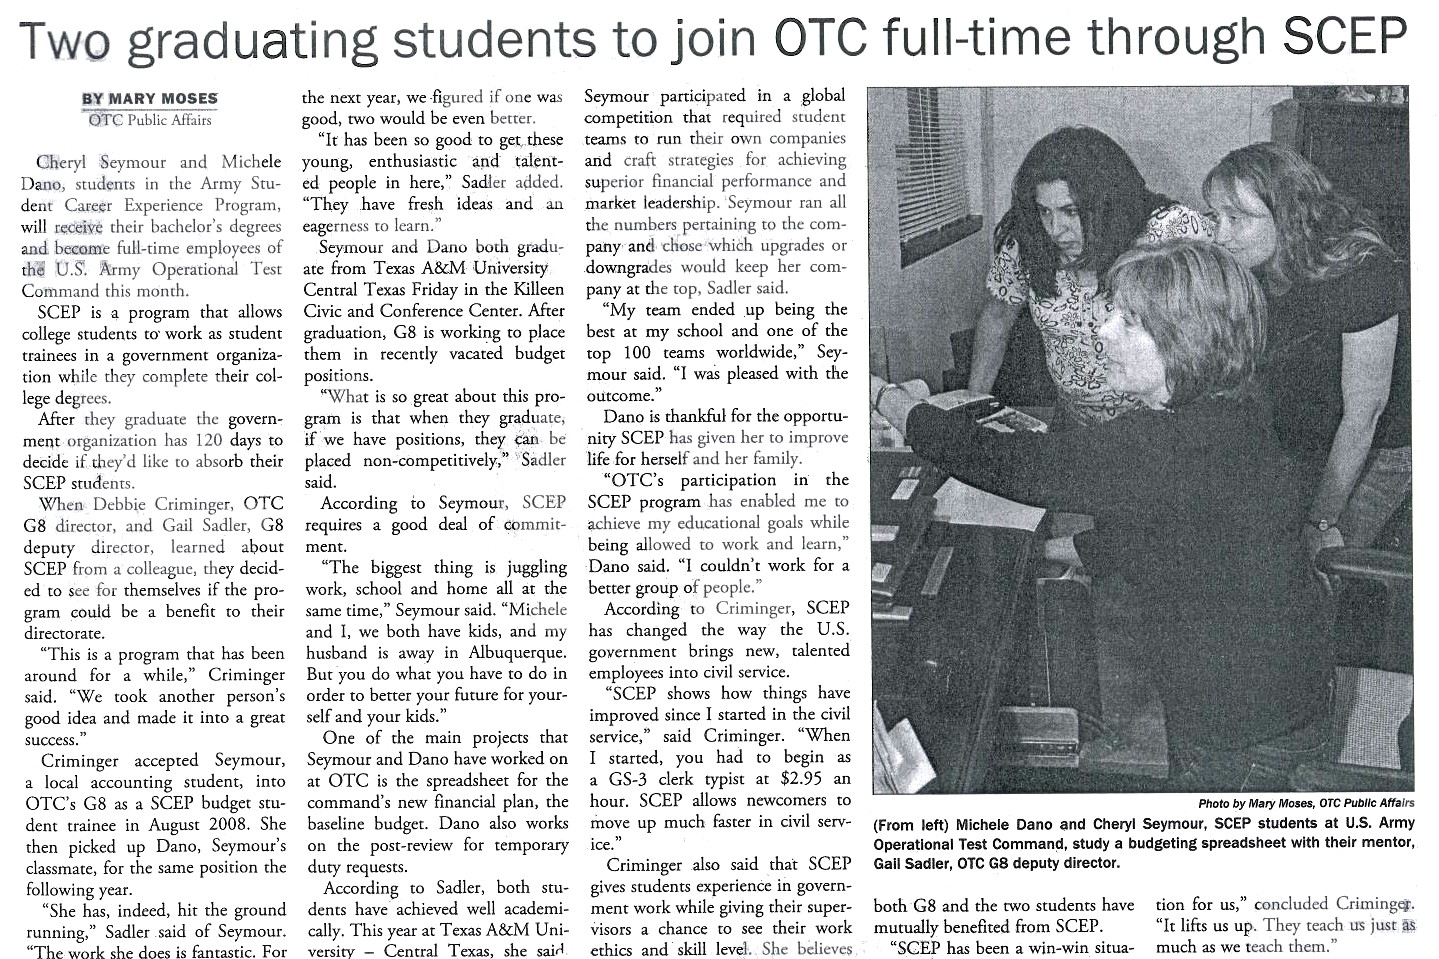 Students to join OTC through SCEP